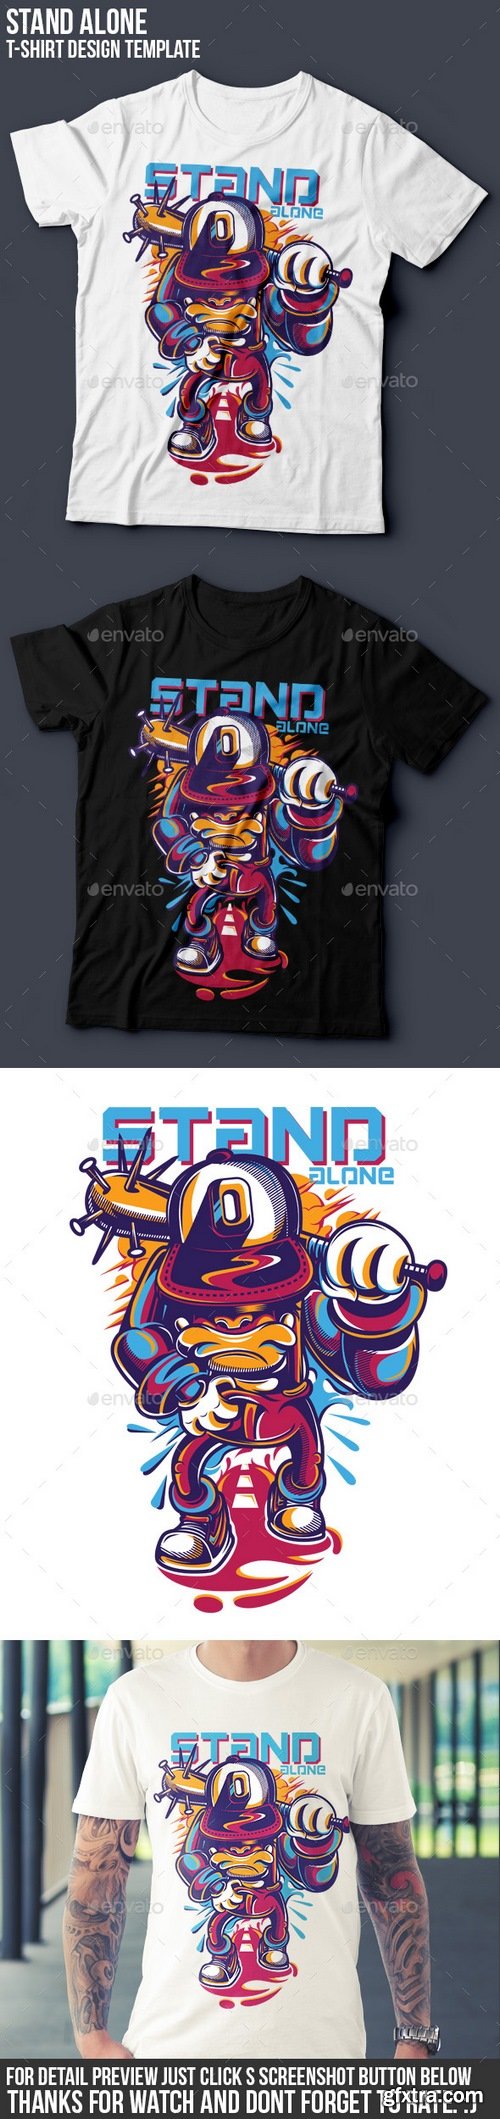 Graphicriver - Stand Alone T-Shirt Design 15514417